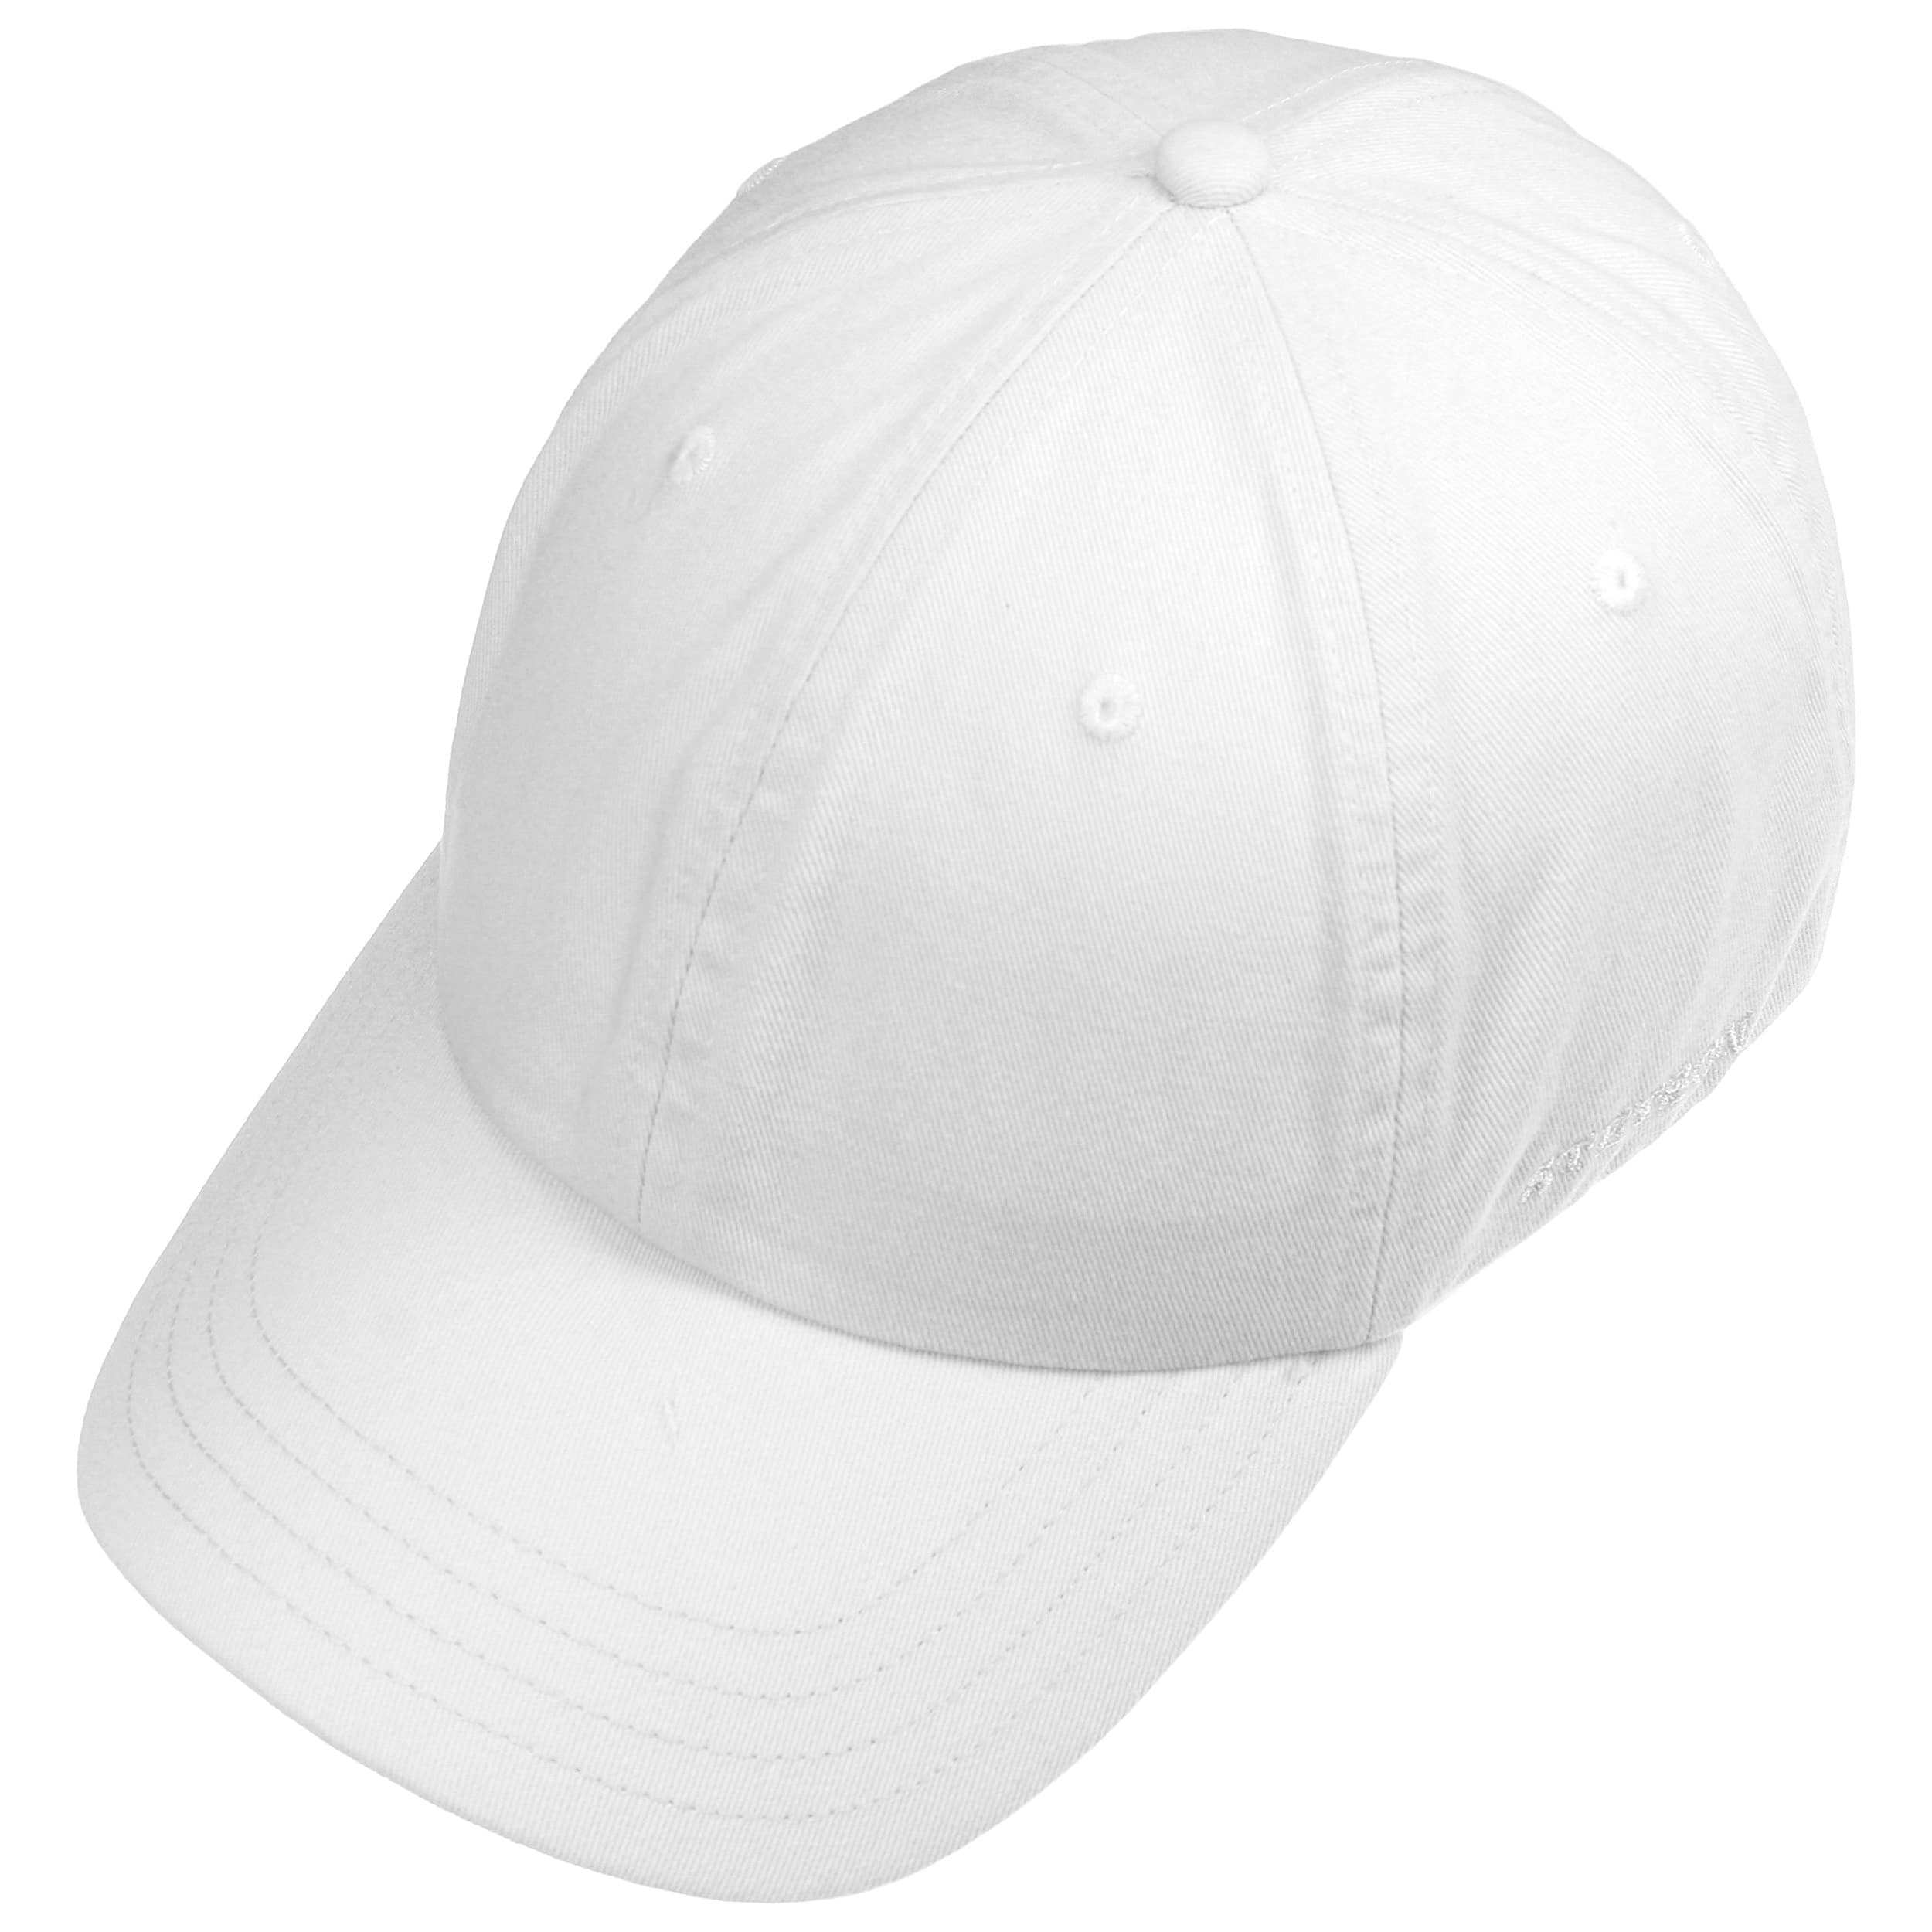 Stetson Rector Adjustable Cotton Baseball Cap with UPF 40+